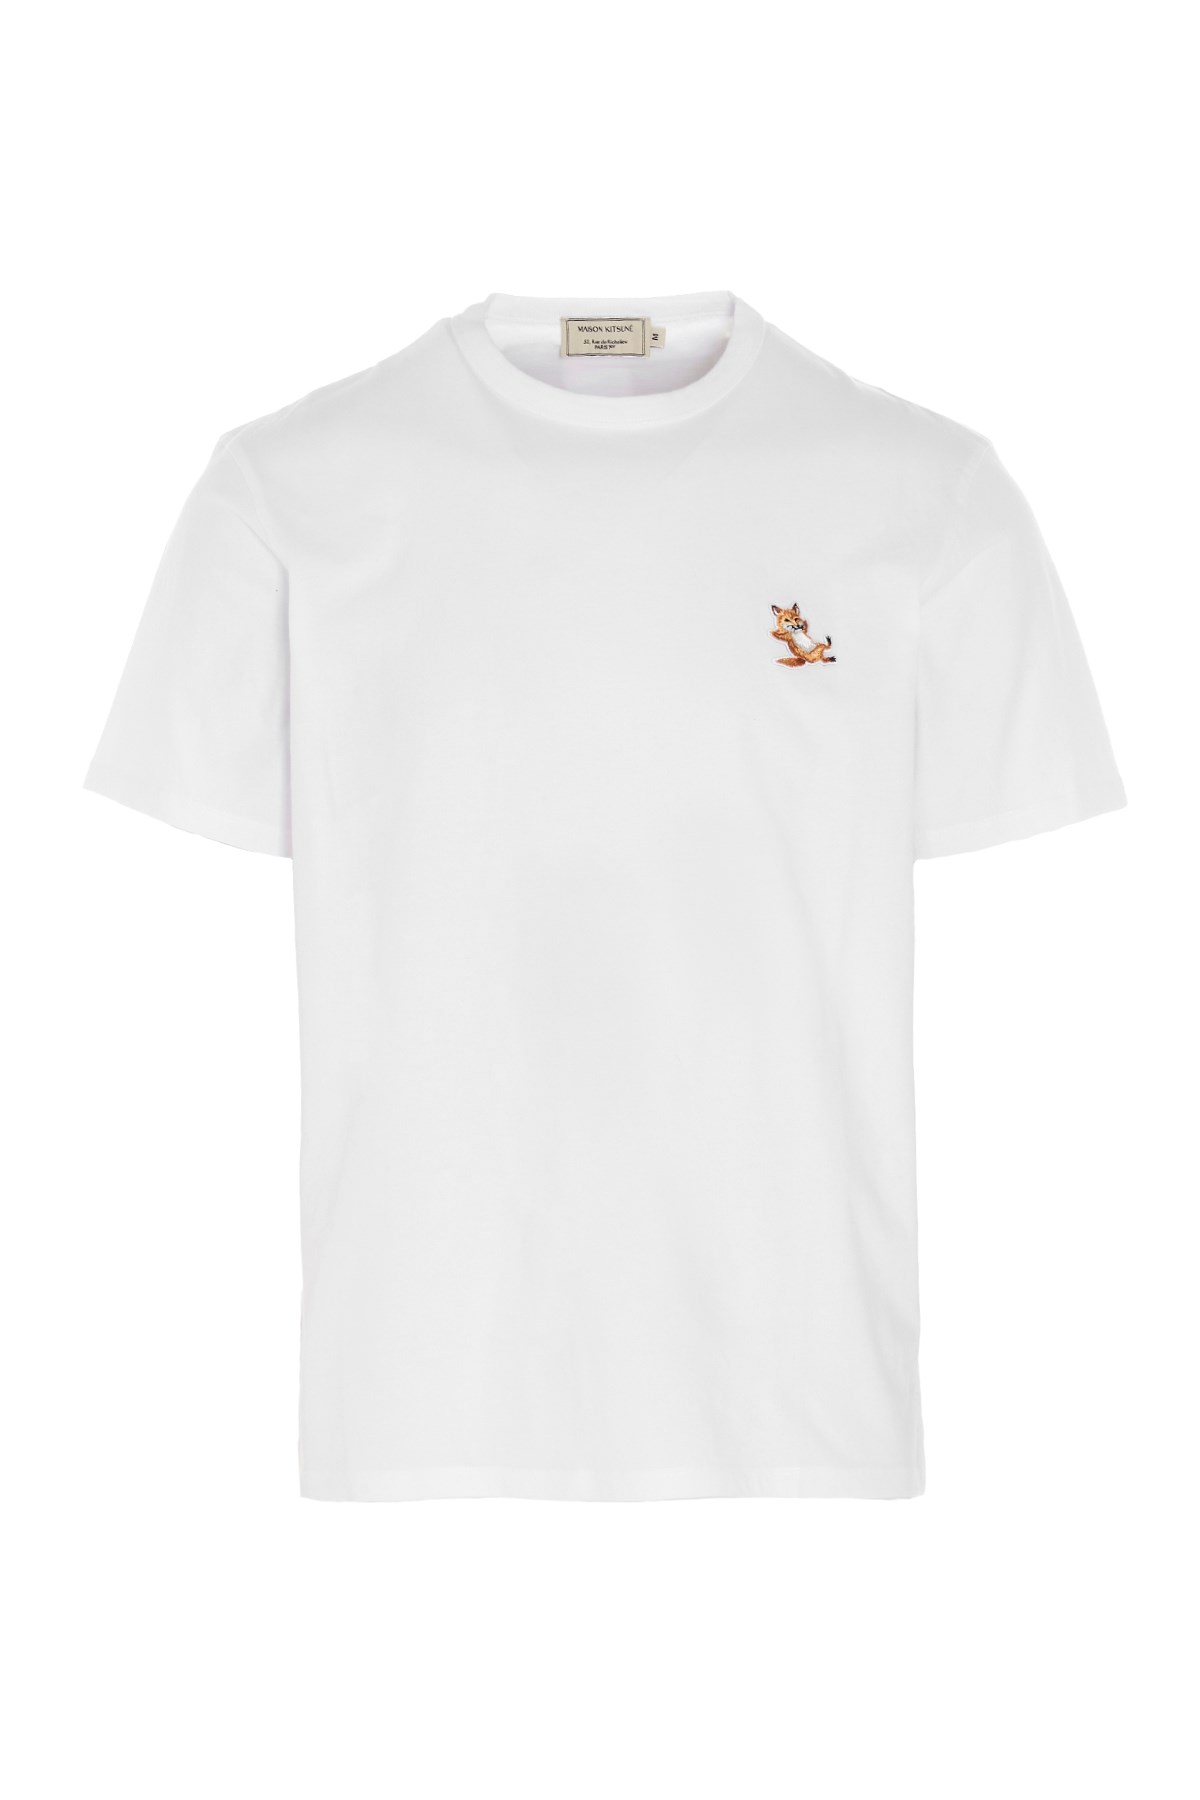 MAISON KITSUNE’ 'Fox Head Patch' T-Shirt